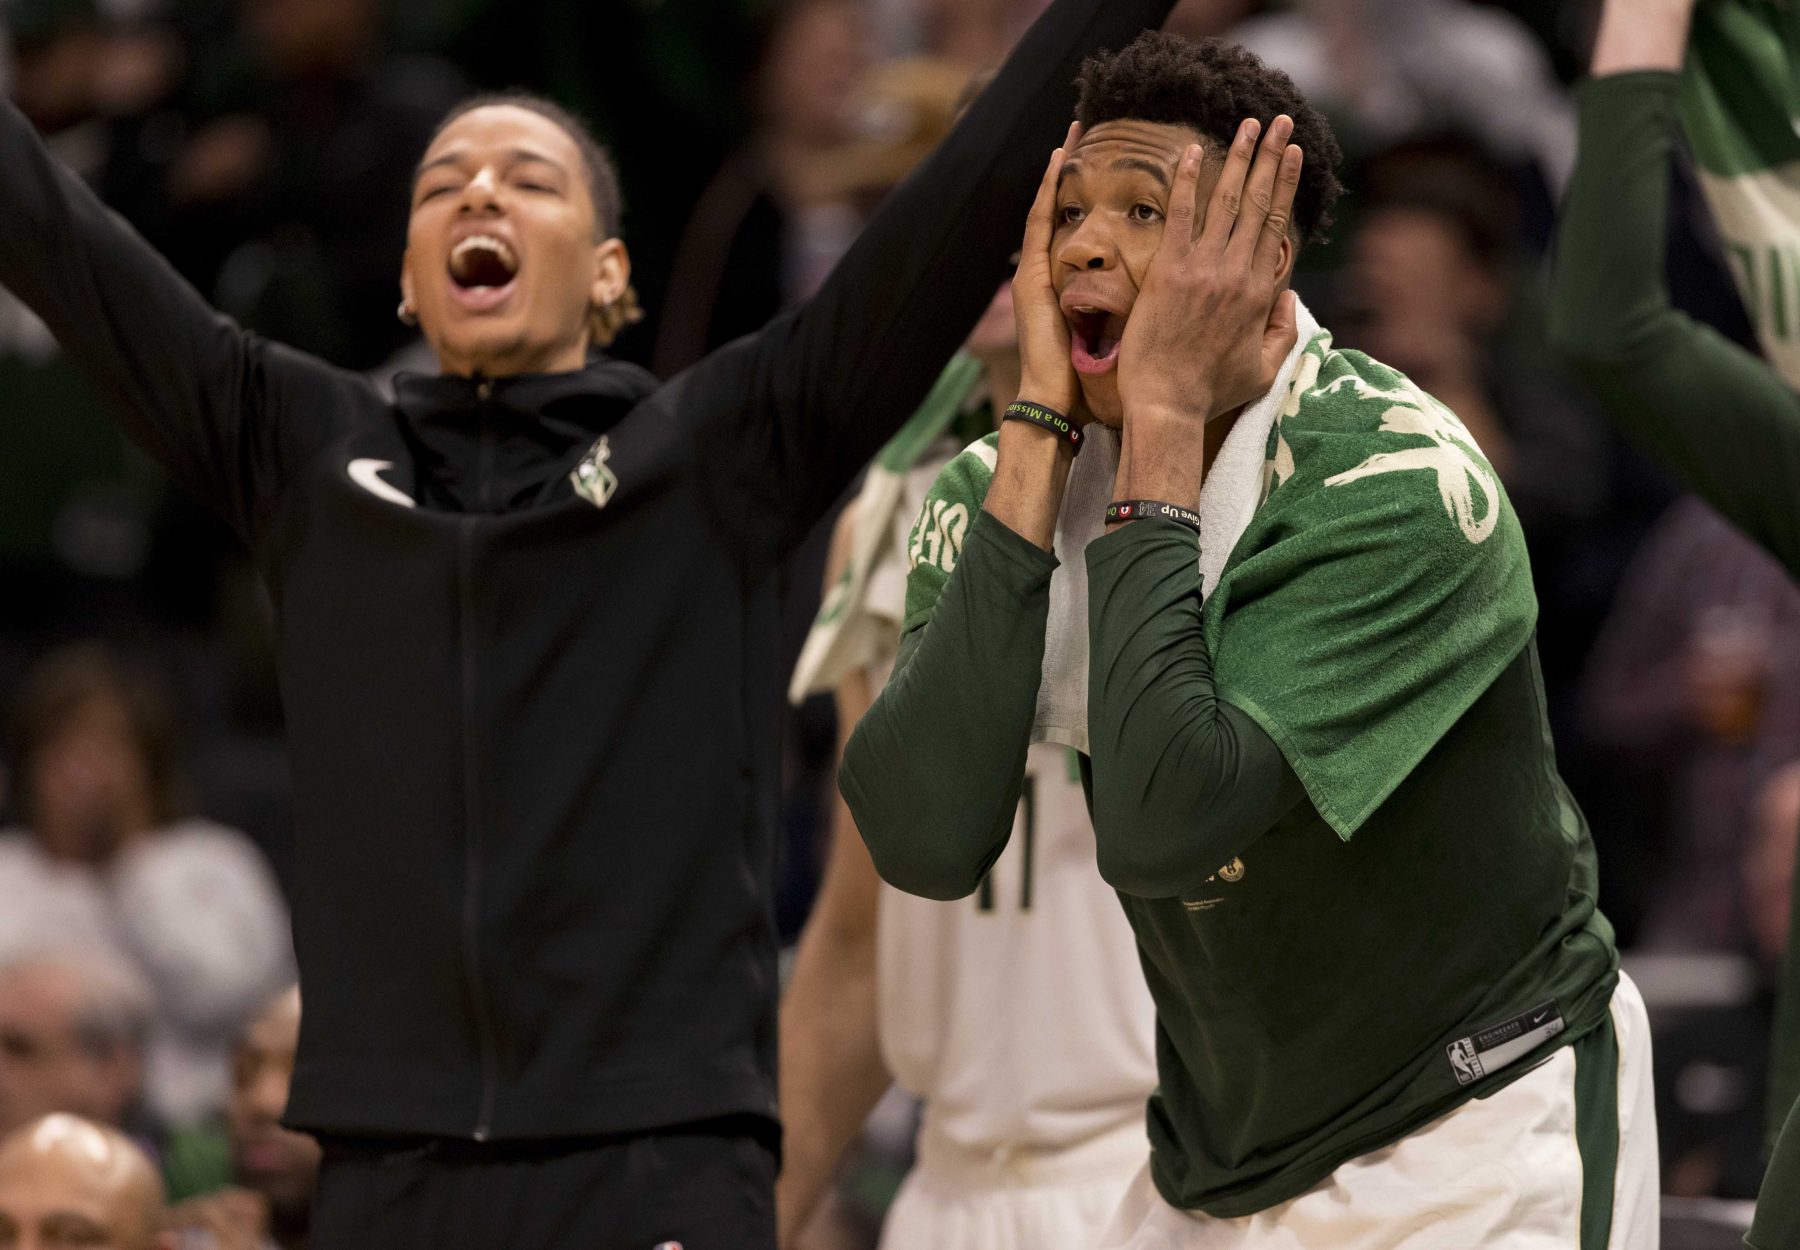 Milwaukee Bucks and Boston Celtics